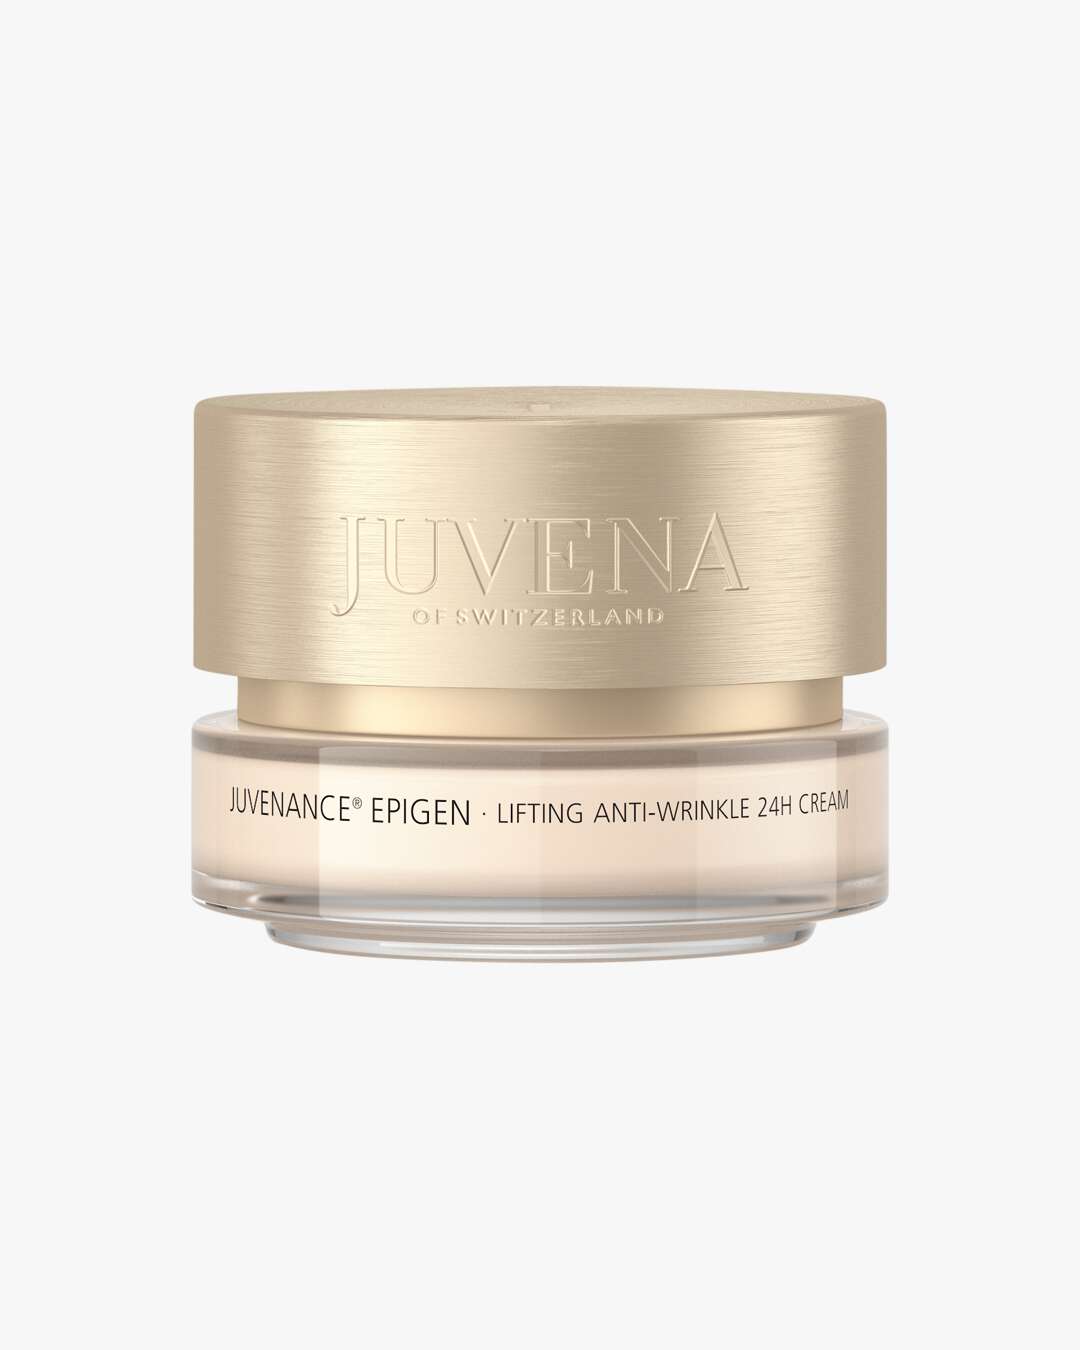 Juvenance Epigen Lifting Anti-Wrinkle 24H Cream 50 ml